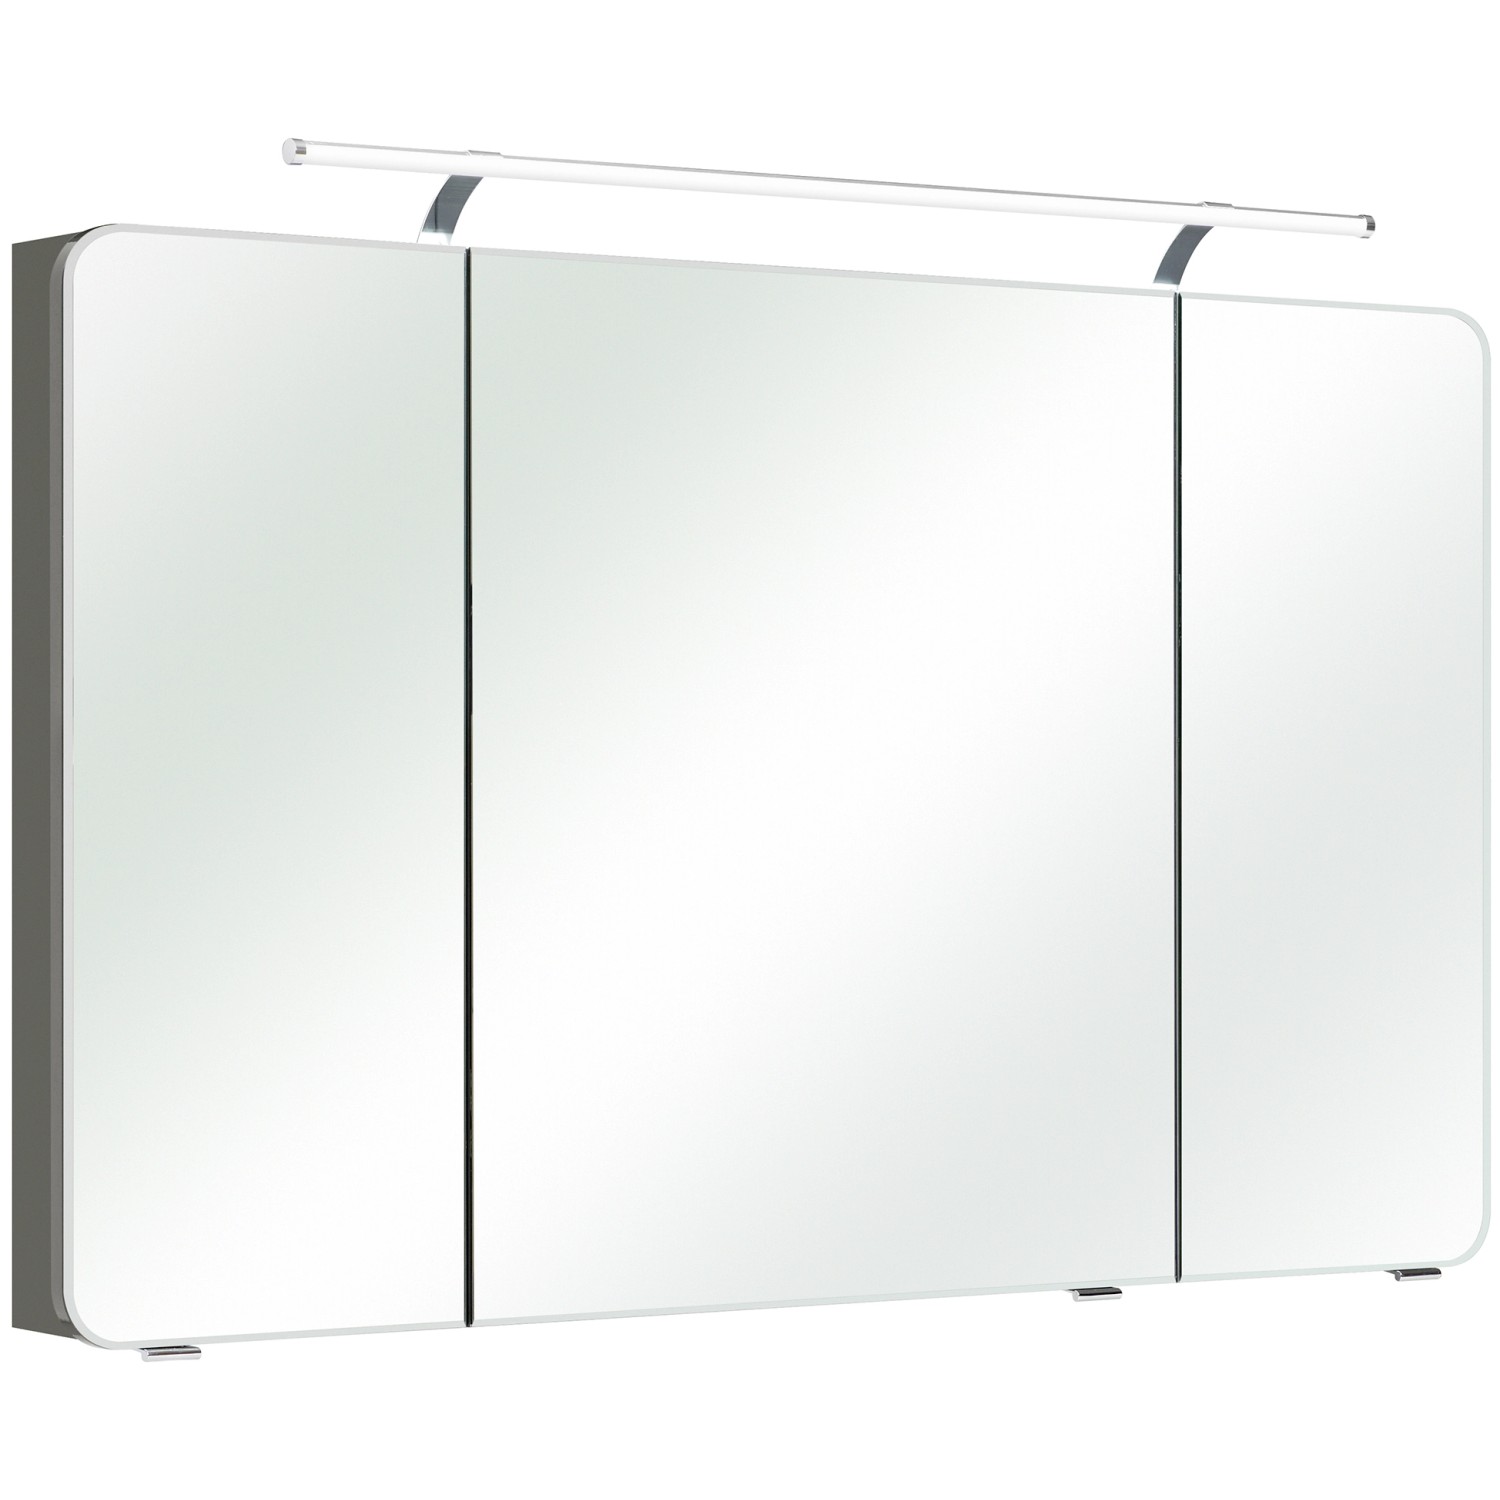 Pelipal Spiegelschrank Serie 4005 Quarzgrau Hochglanz 120 cm mit Softclose Türen